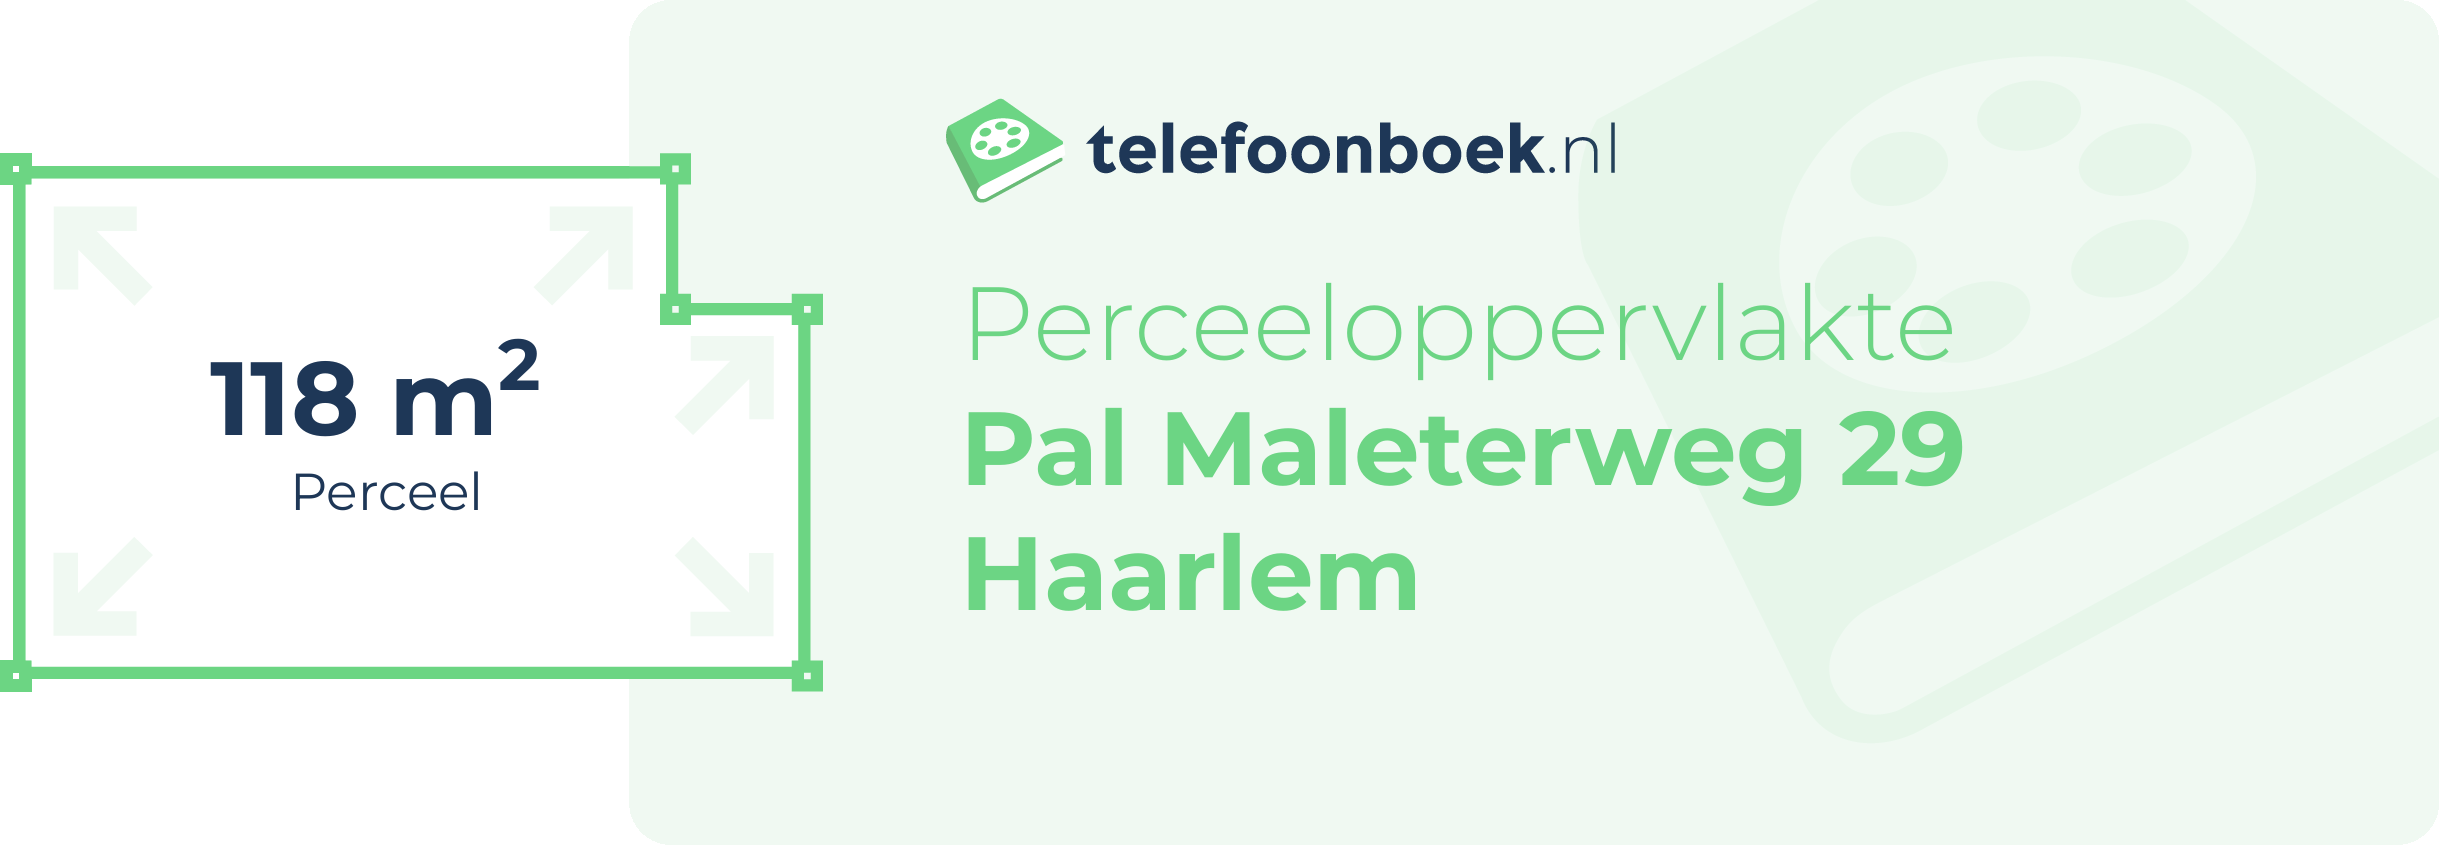 Perceeloppervlakte Pal Maleterweg 29 Haarlem